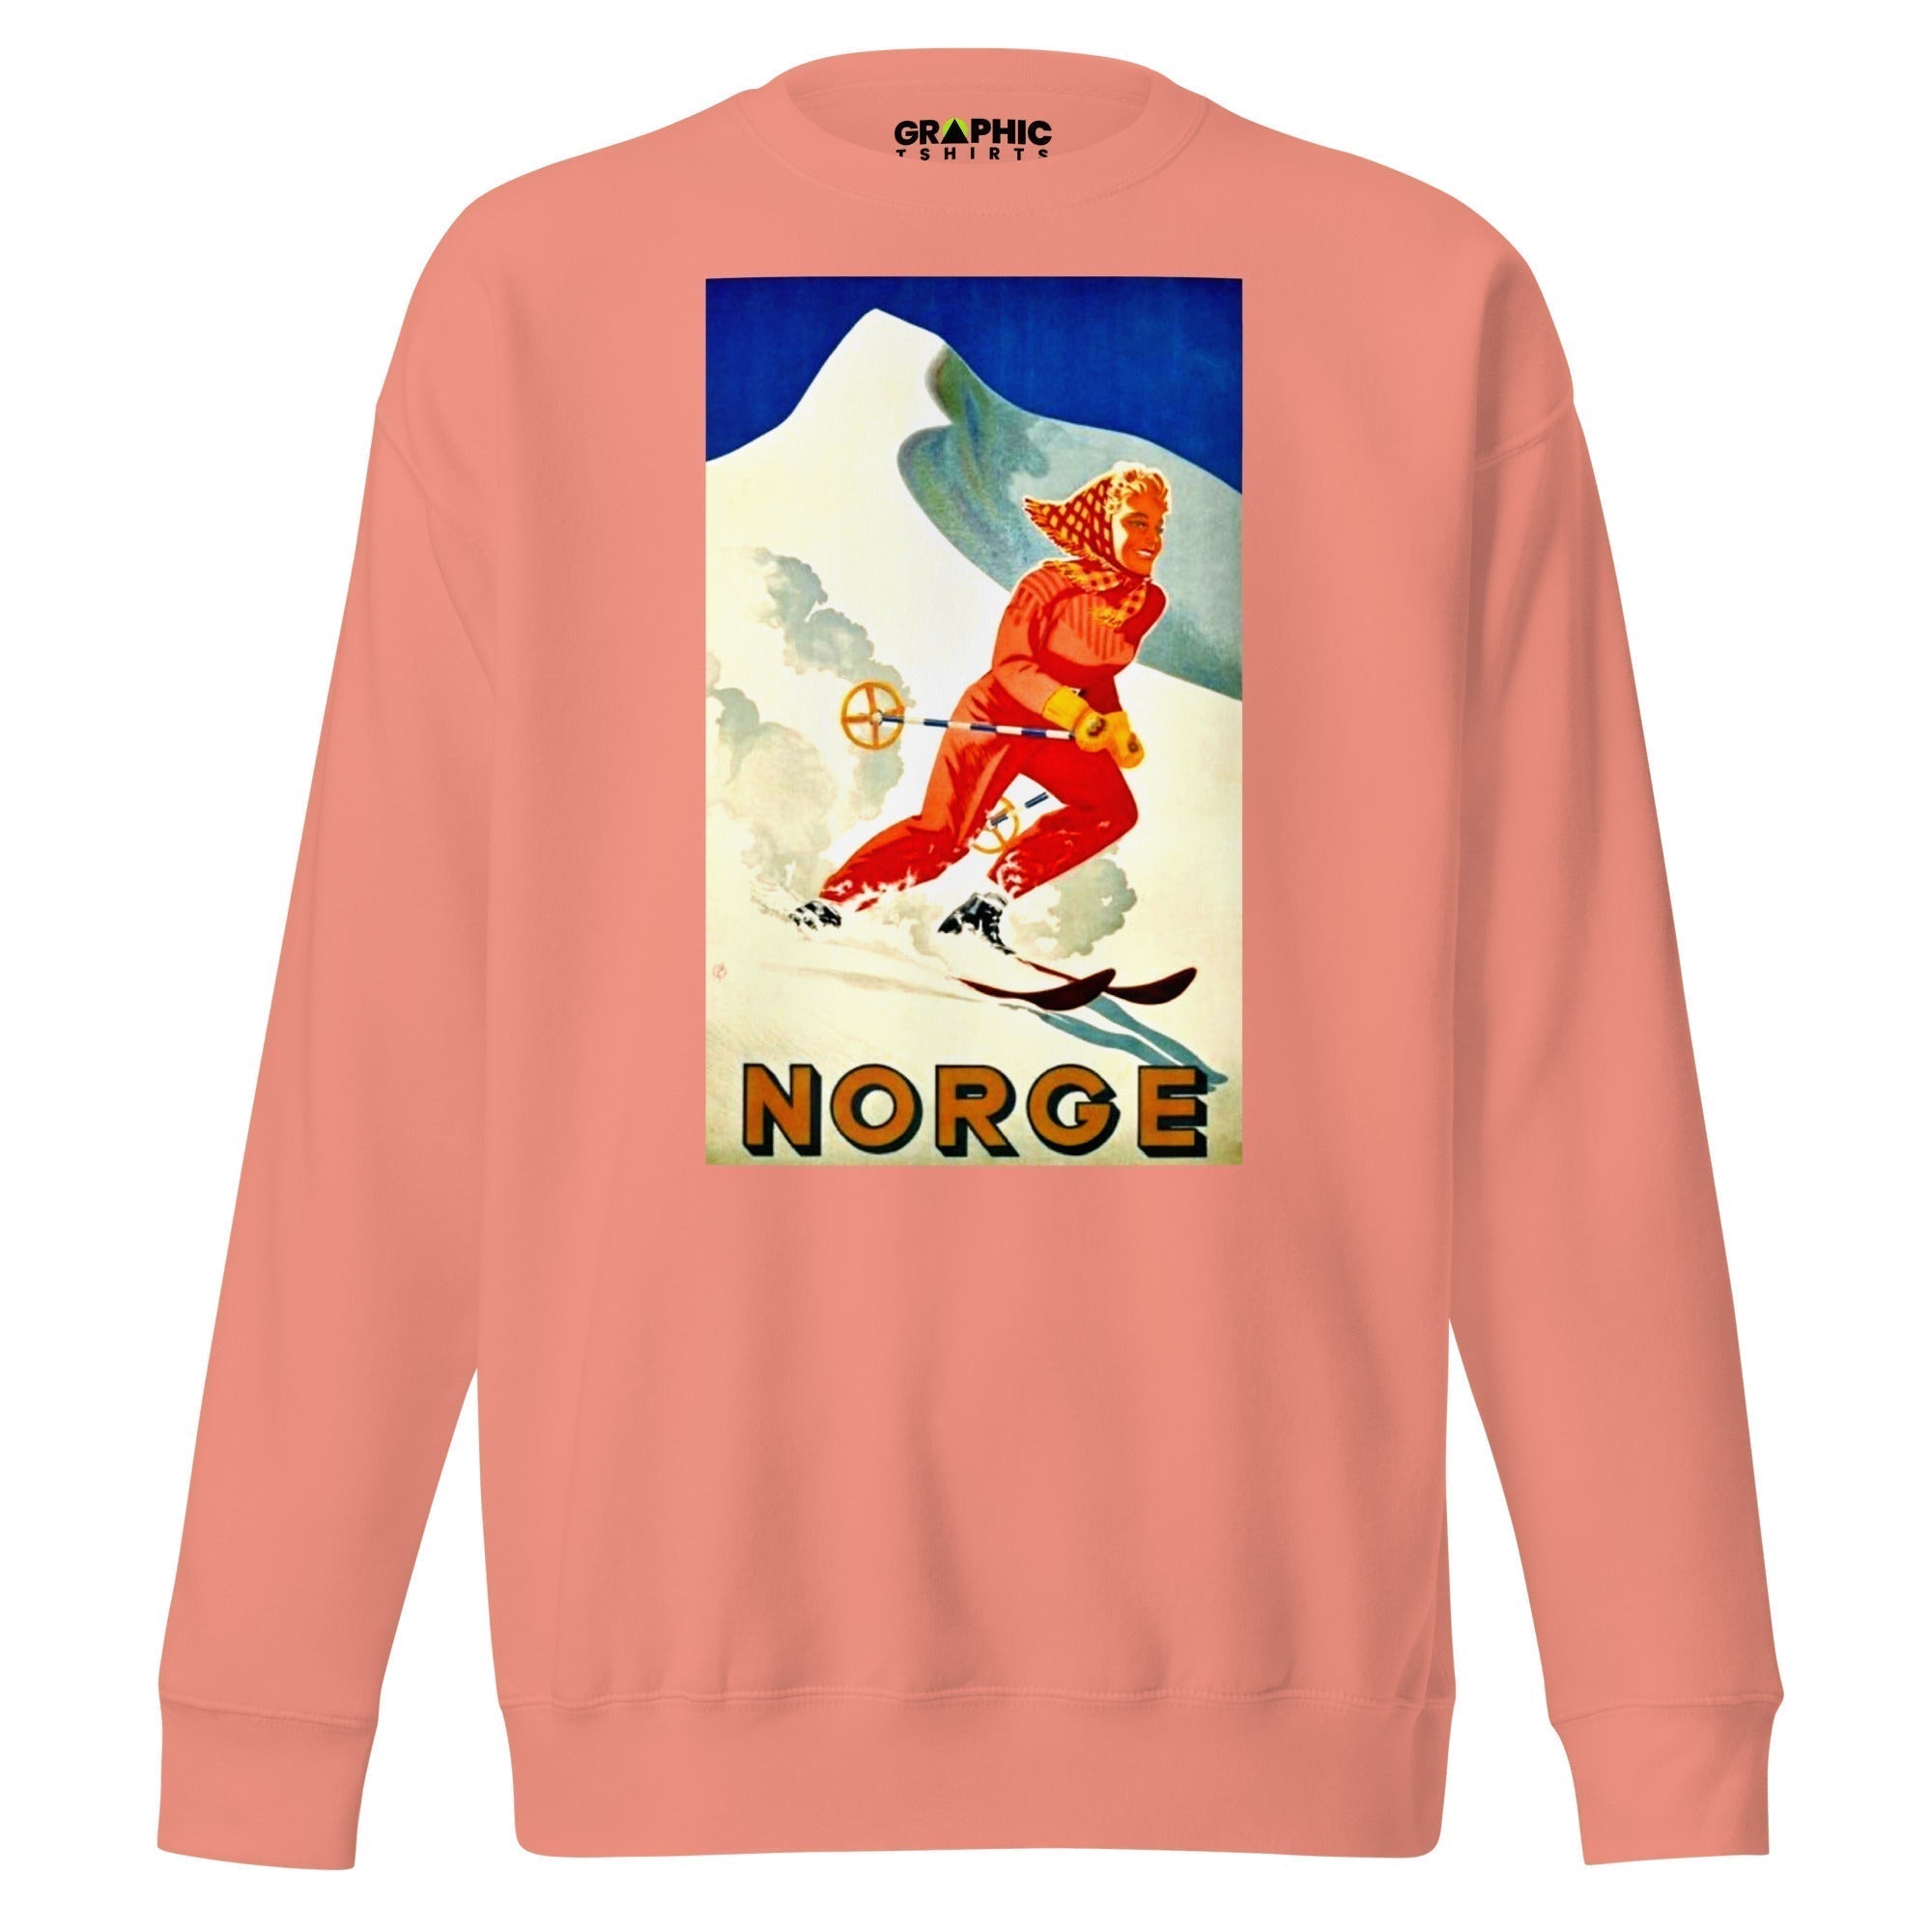 Unisex Premium Sweatshirt - Norge Norway Skiing Vintage - GRAPHIC T-SHIRTS